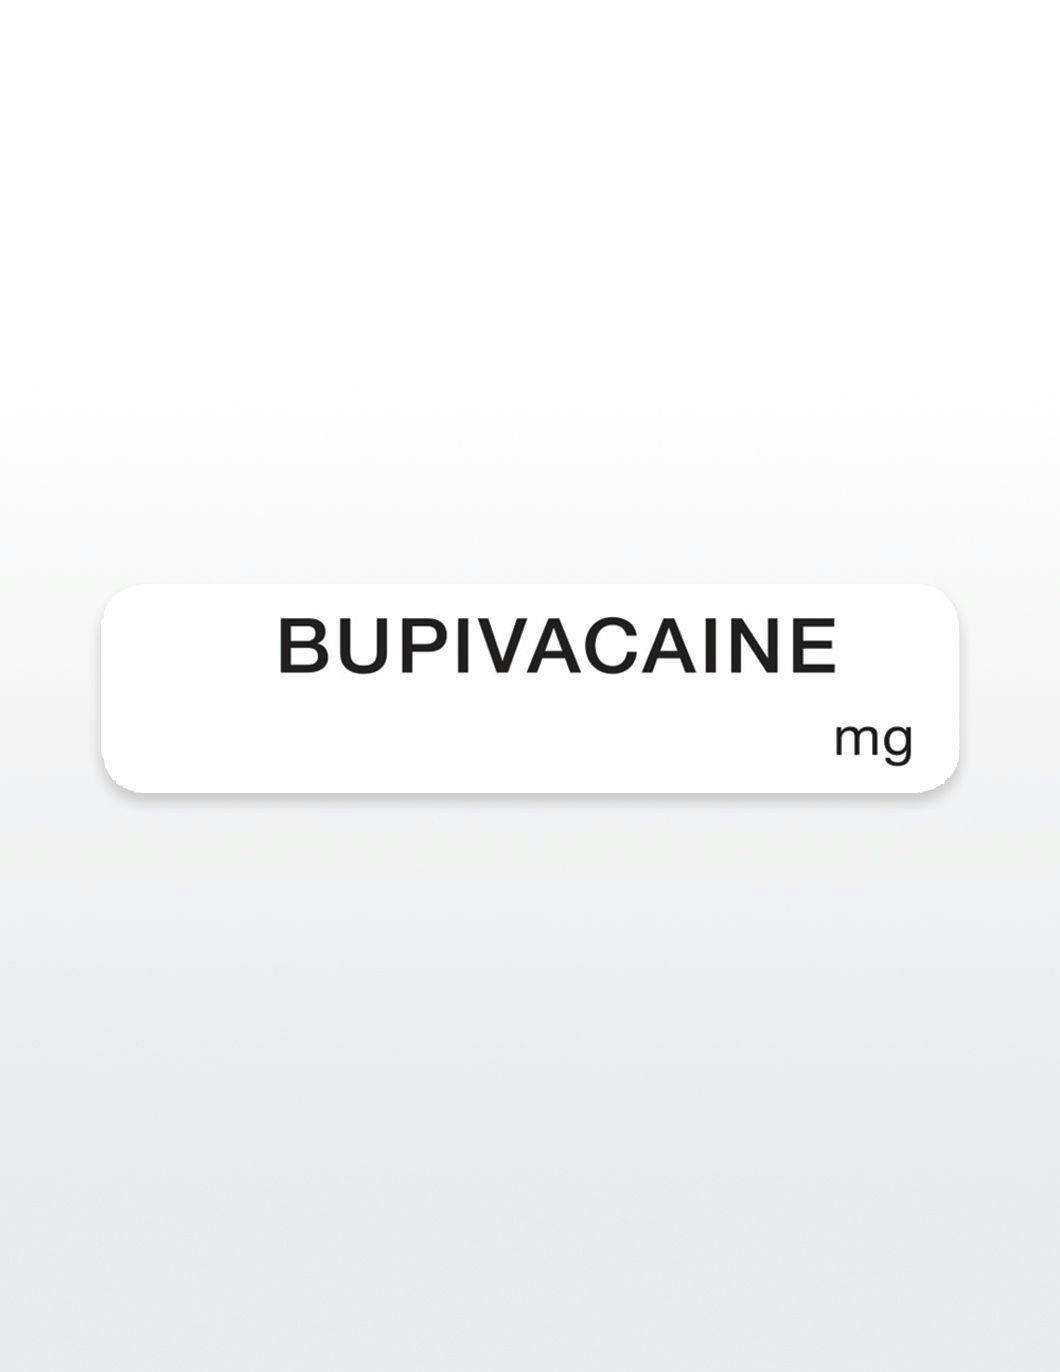 bupivacaine-drug-syringe-stickers